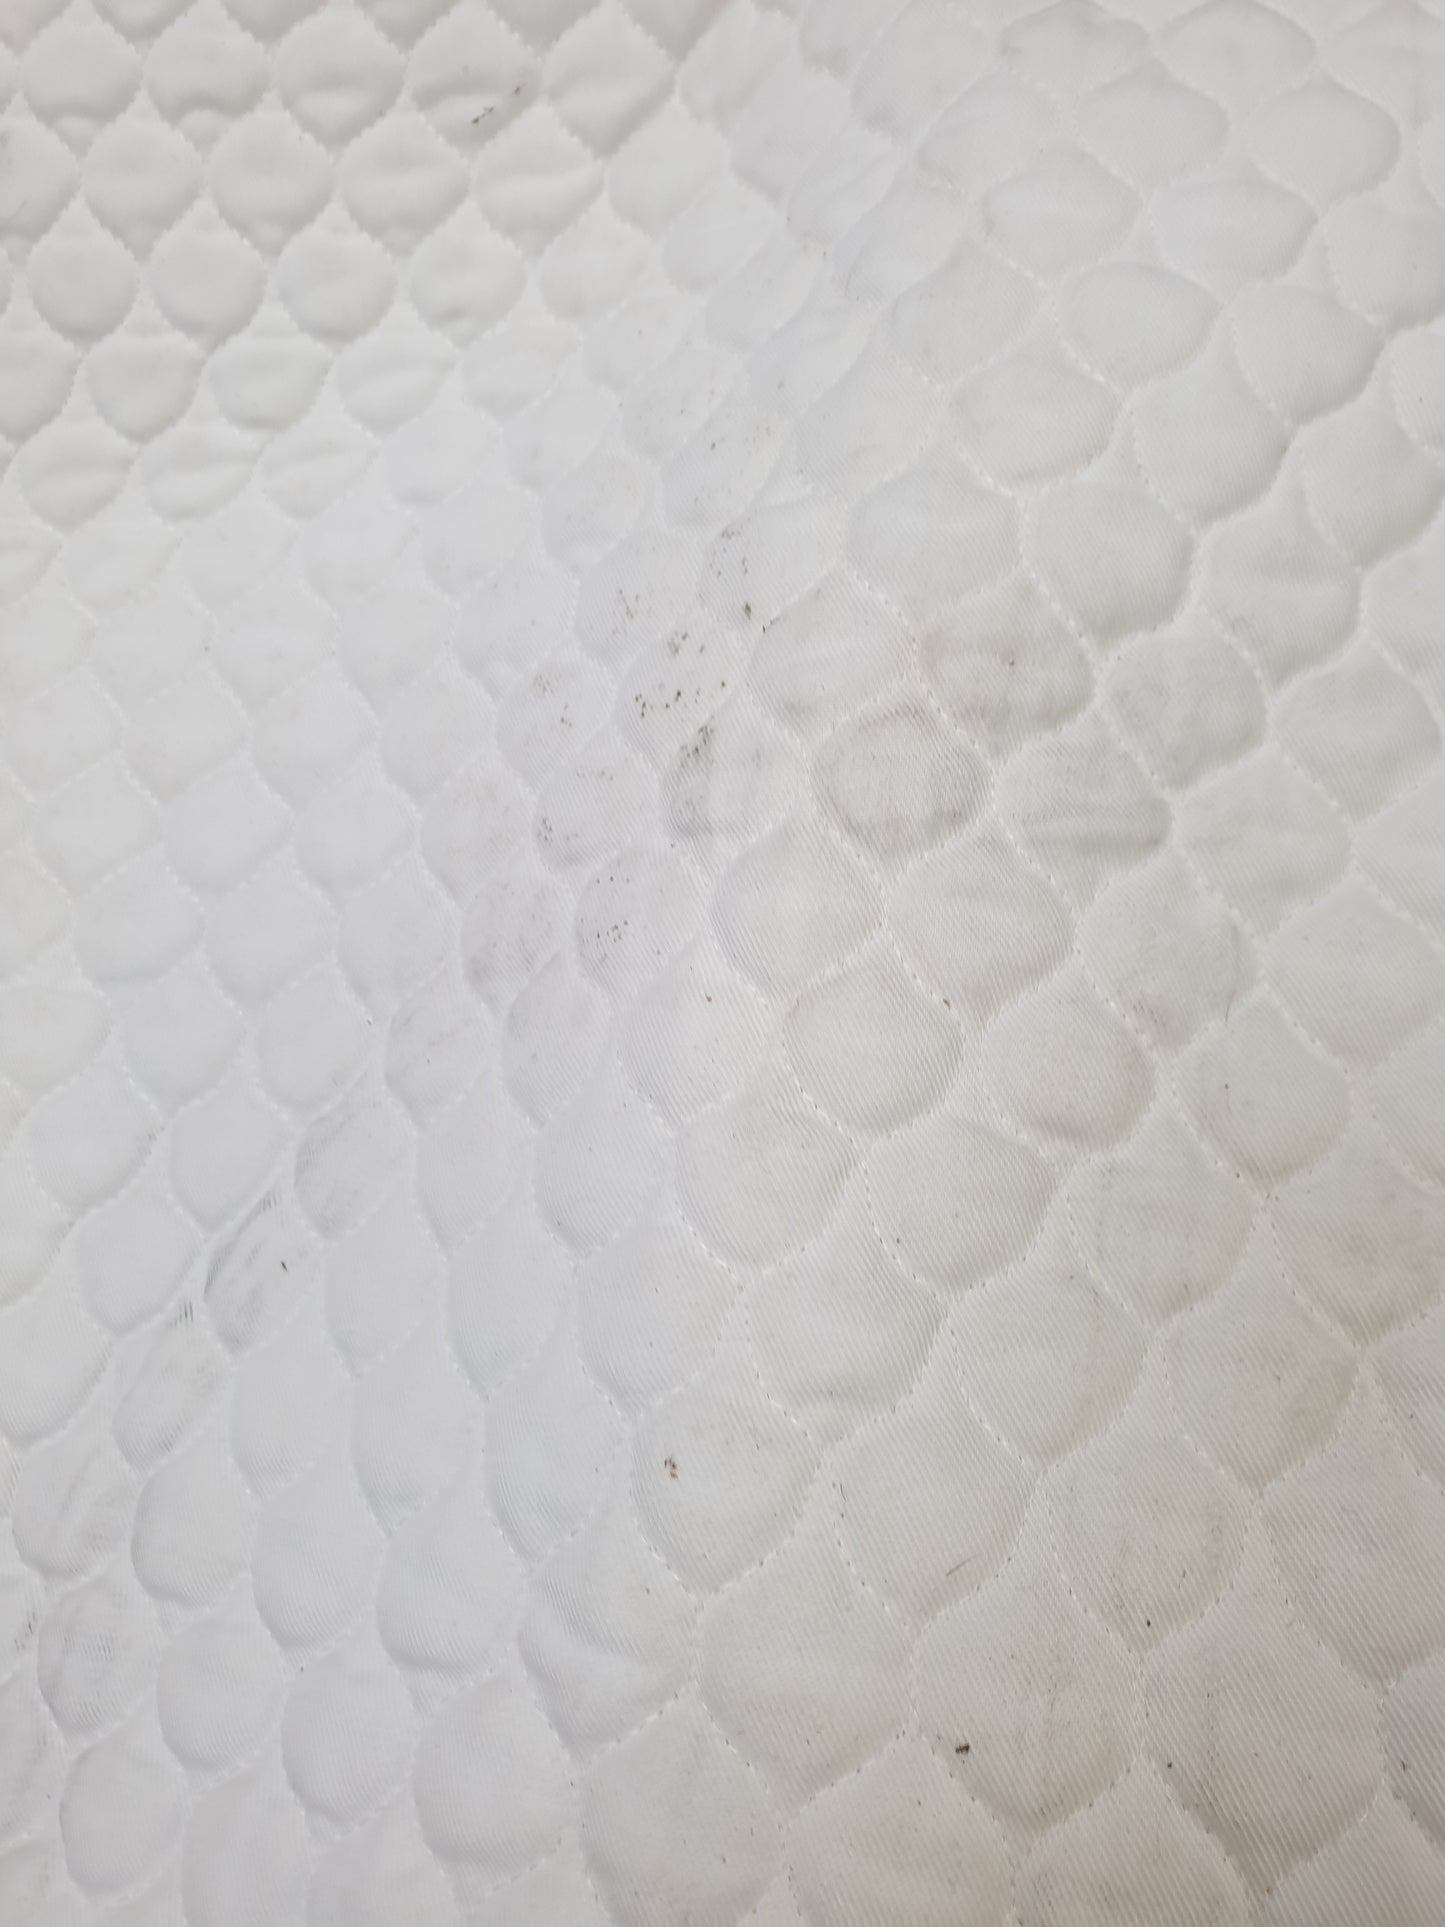 Used full size white Nuumed dressage saddle cloth FREE POSTAGE☆